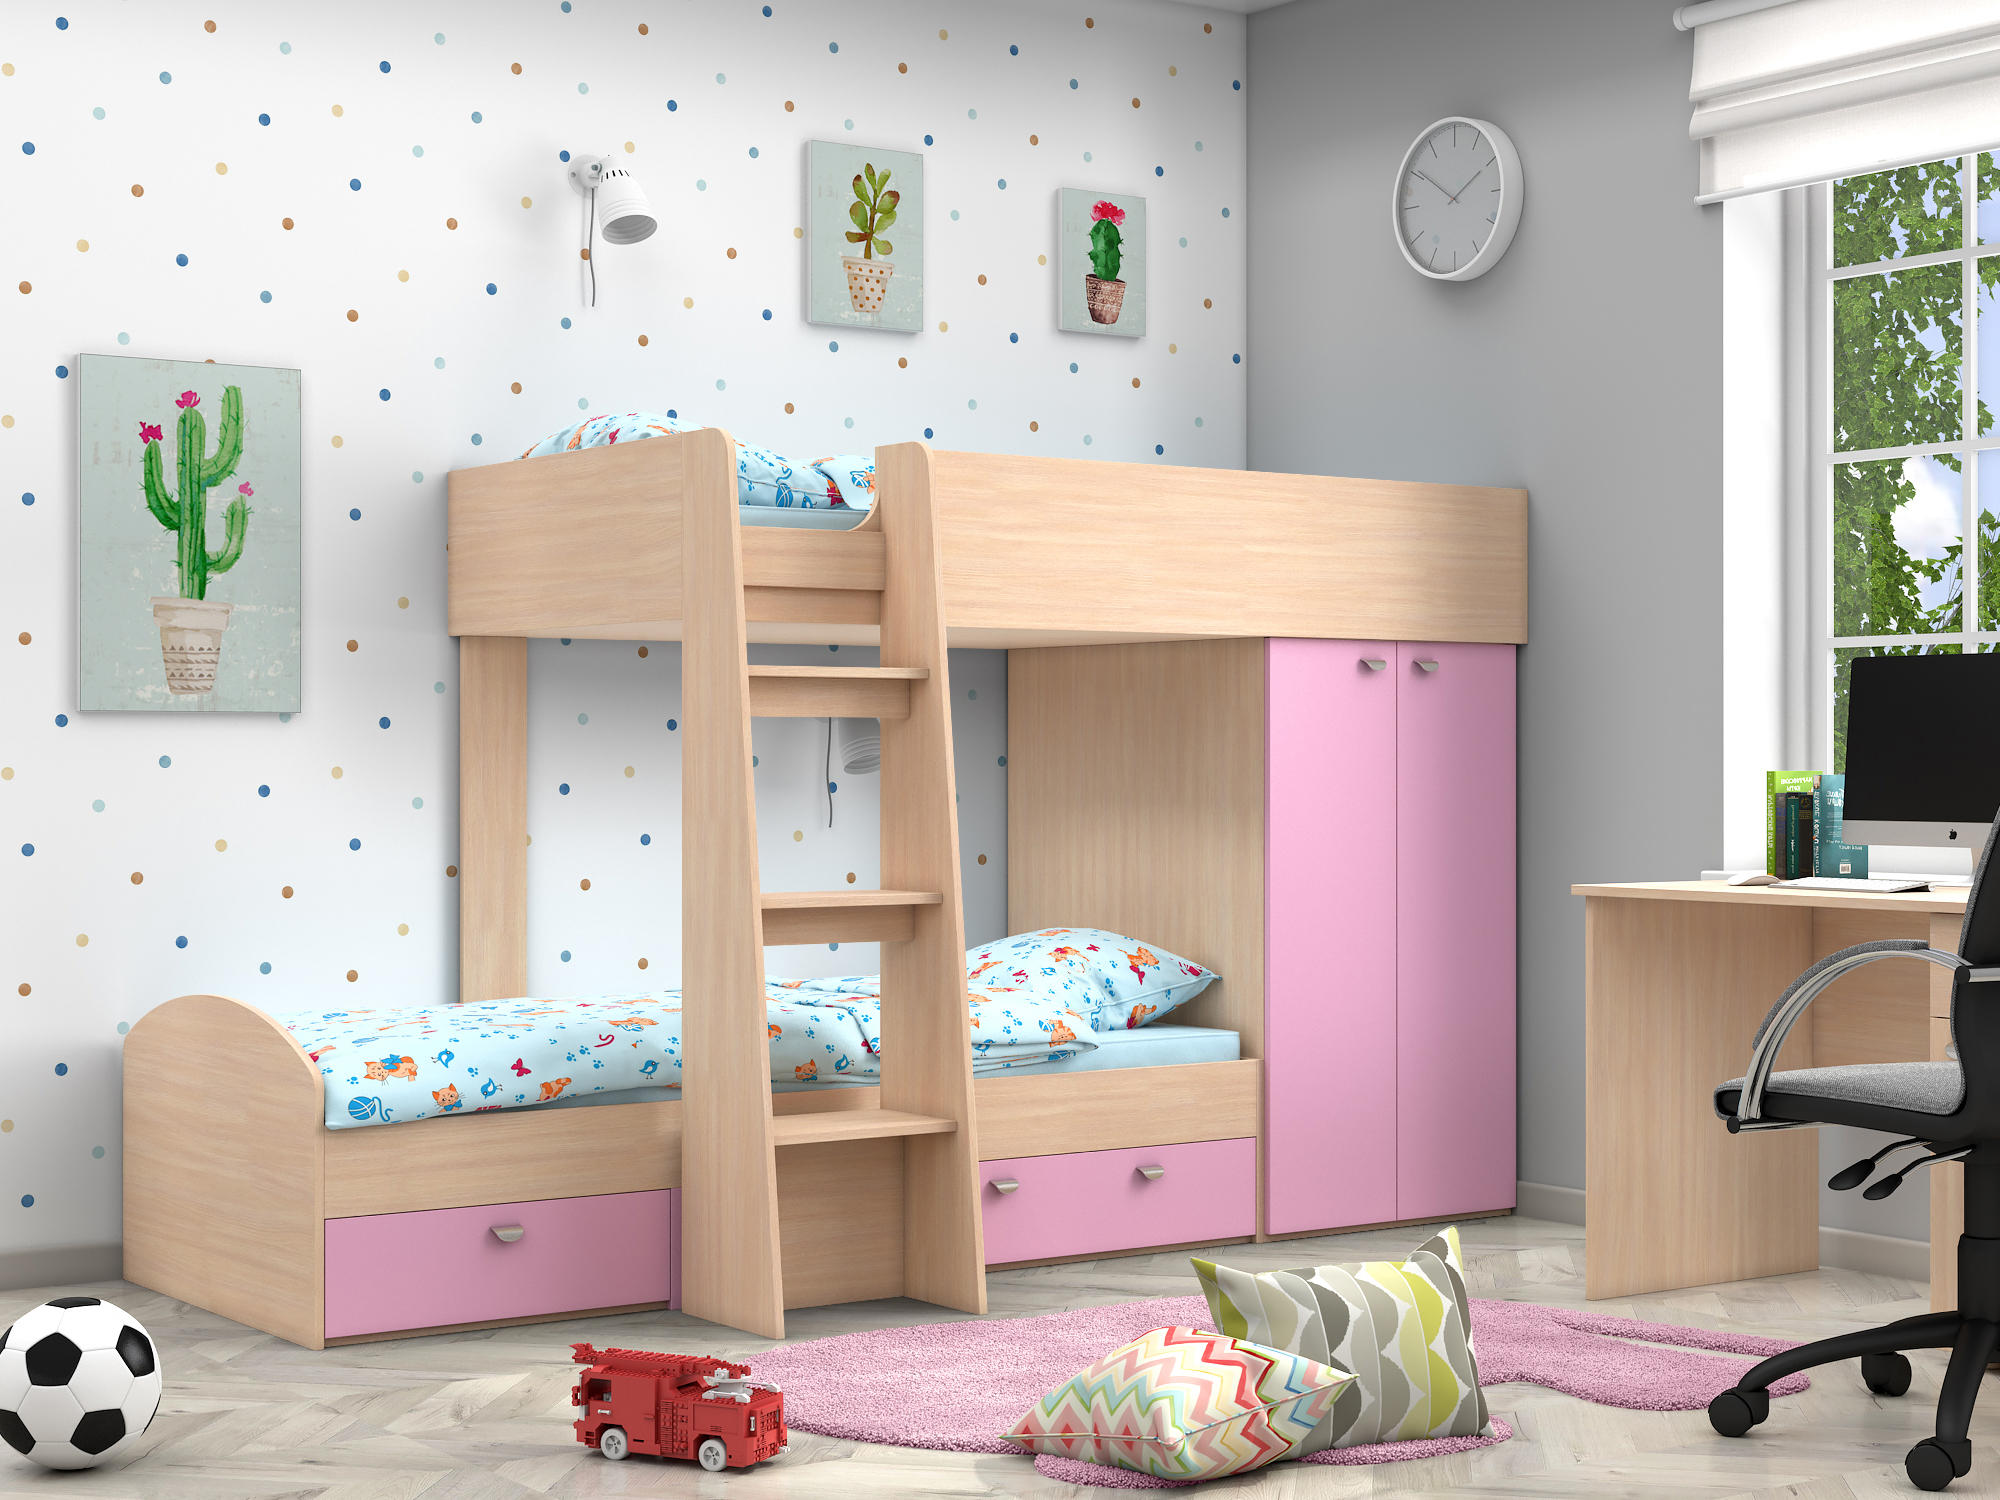 Двухъярусная кровать Golden Kids-2 (90х200) Розовый, Белый, Бежевый, ЛДСП двухъярусная кровать golden kids 2 90х200 зеленый бежевый лдсп